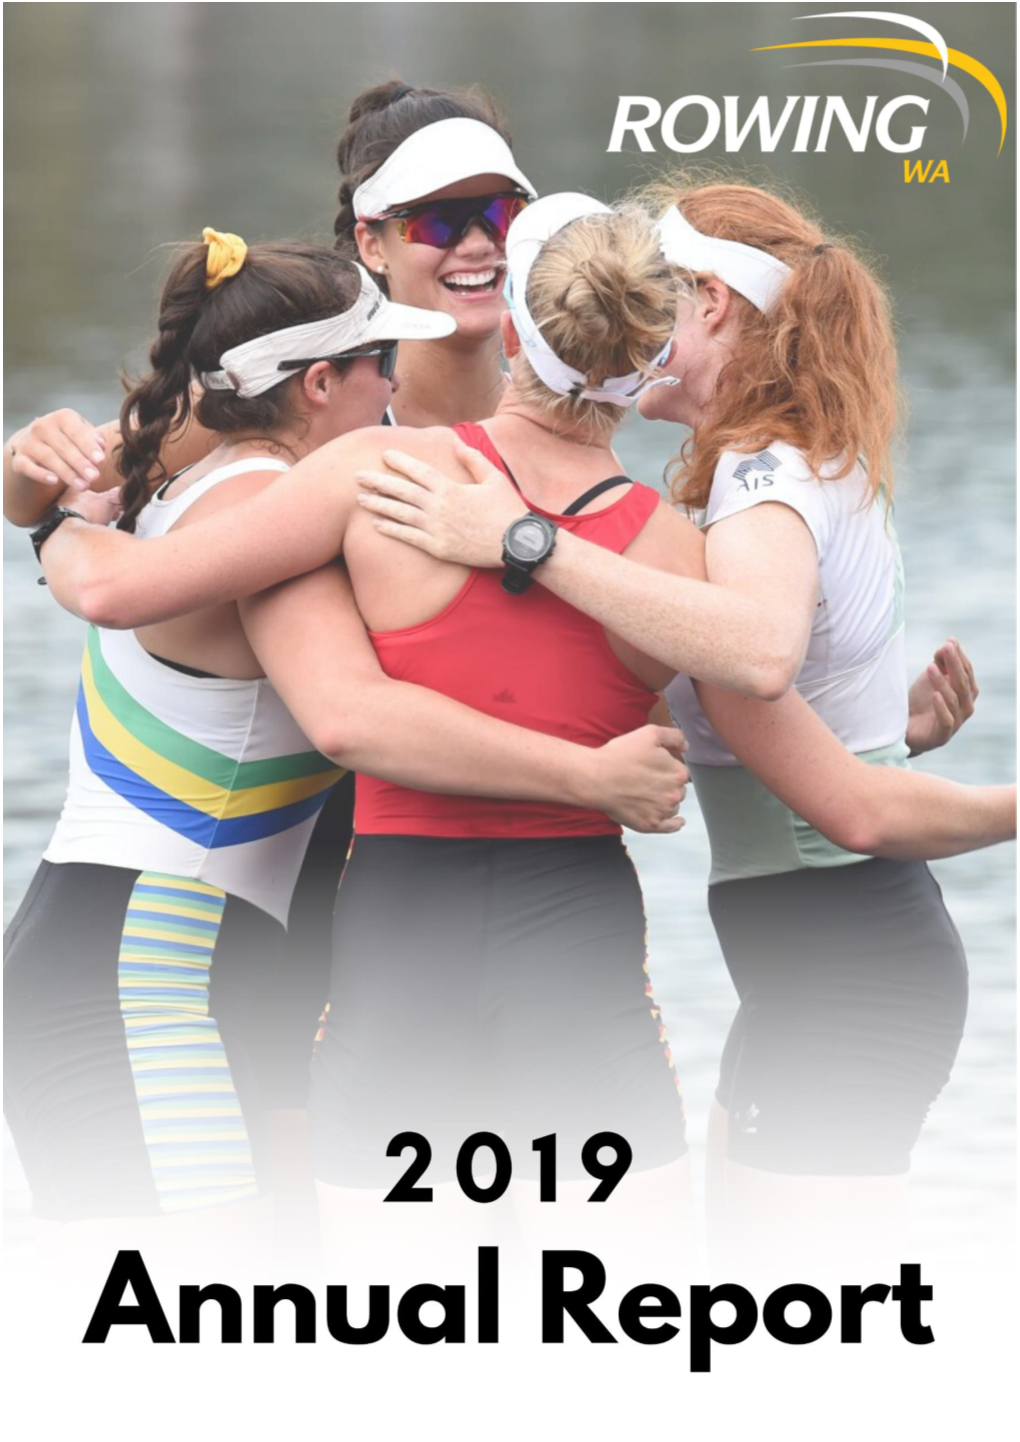 Insert PDF “2019 Annual Report” Cover Here